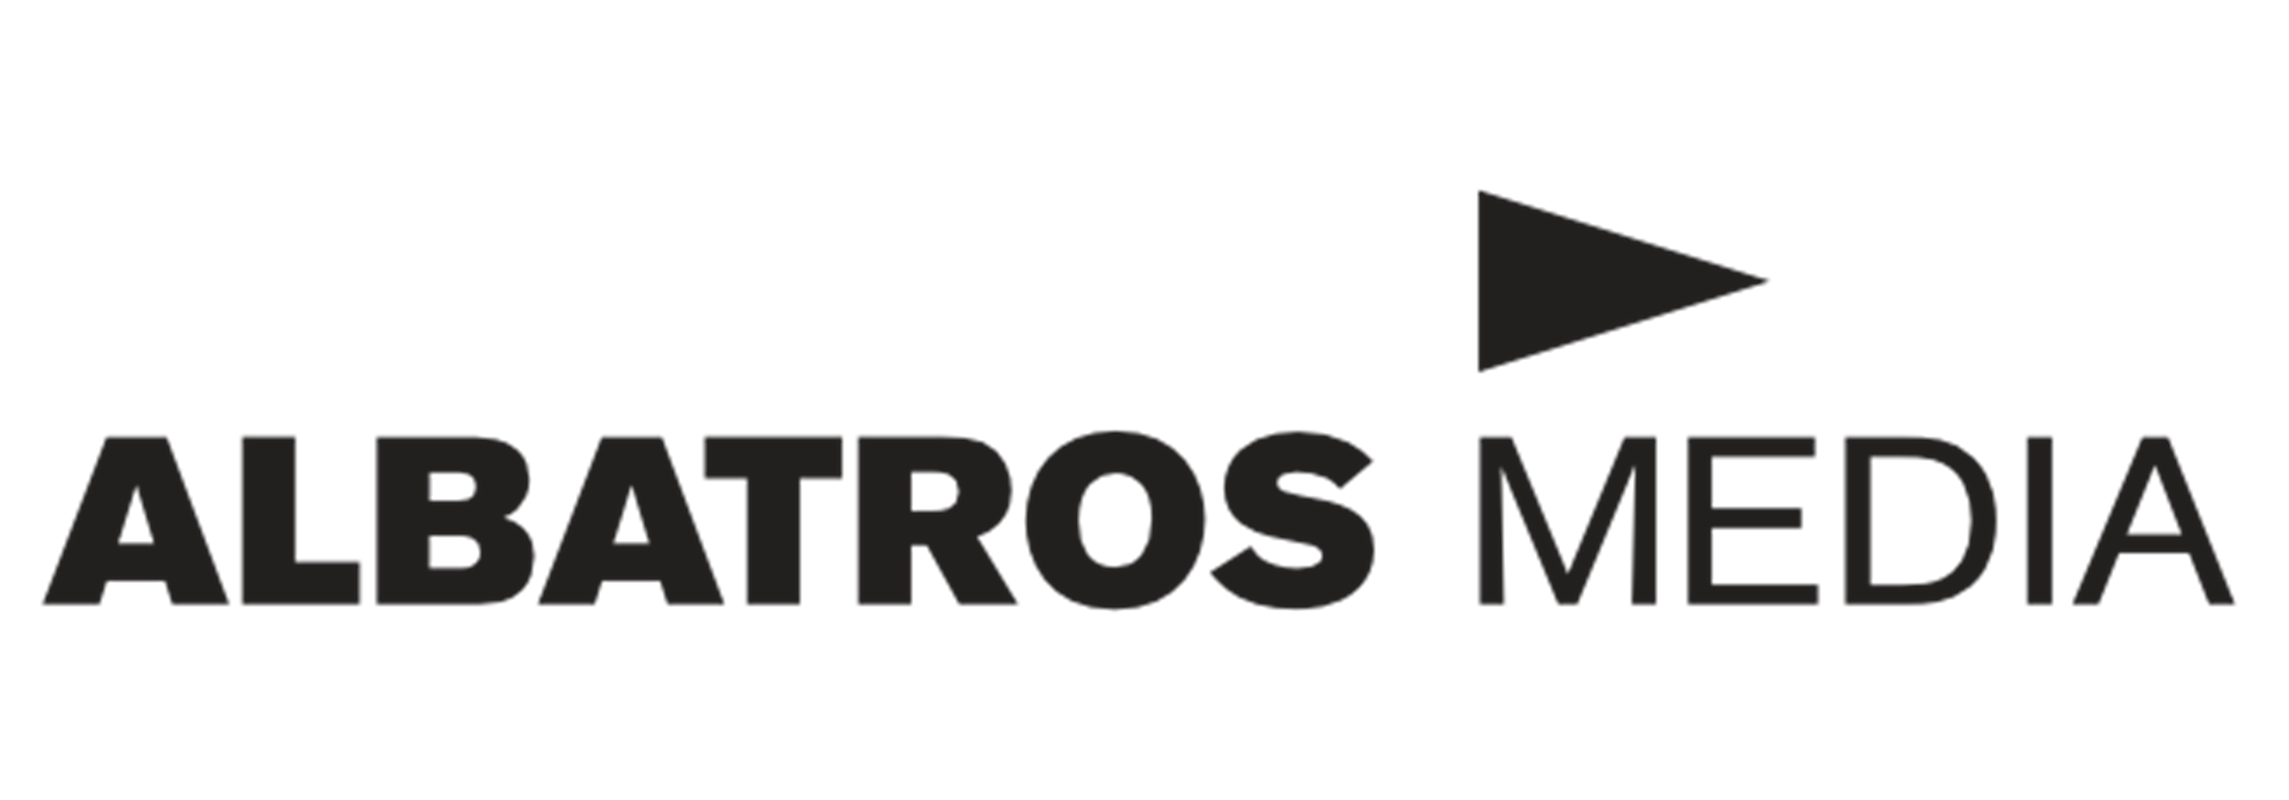 Albatros Media logo